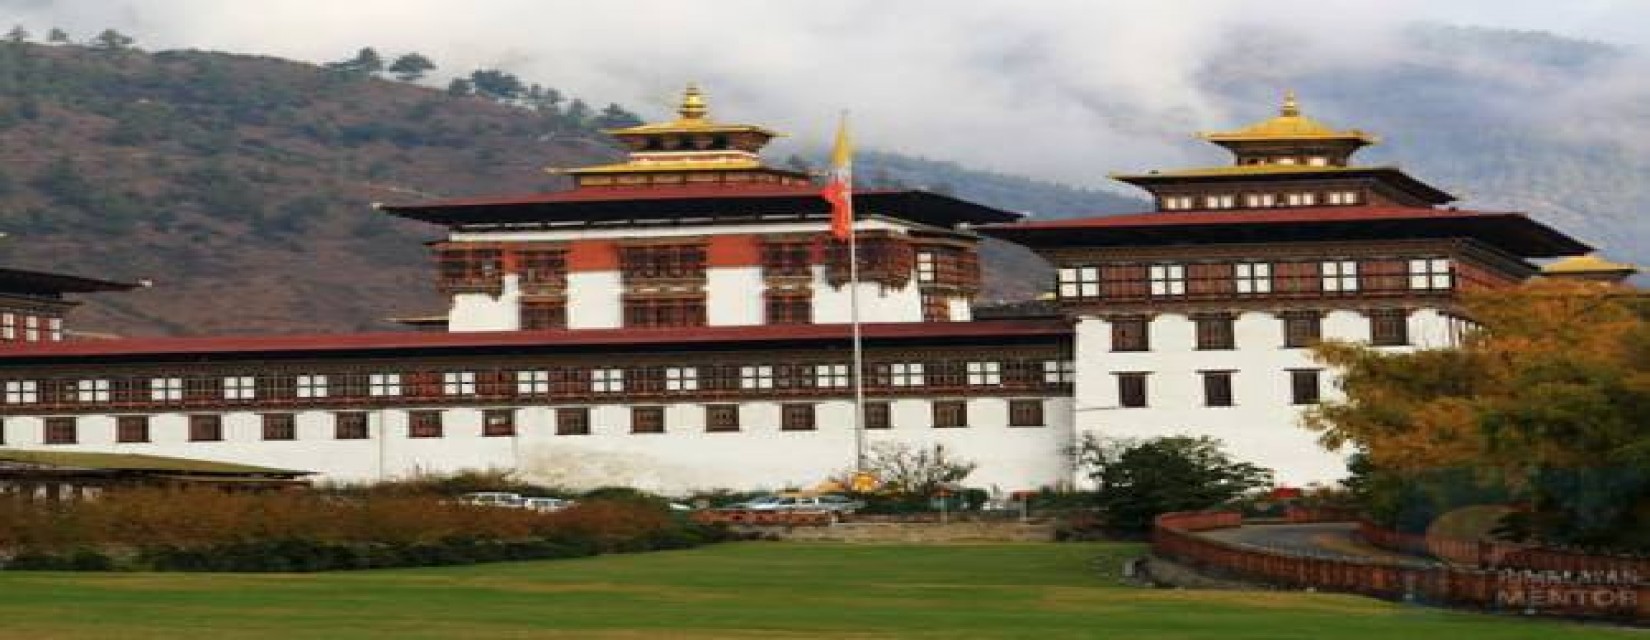 Monastery in Bhutan